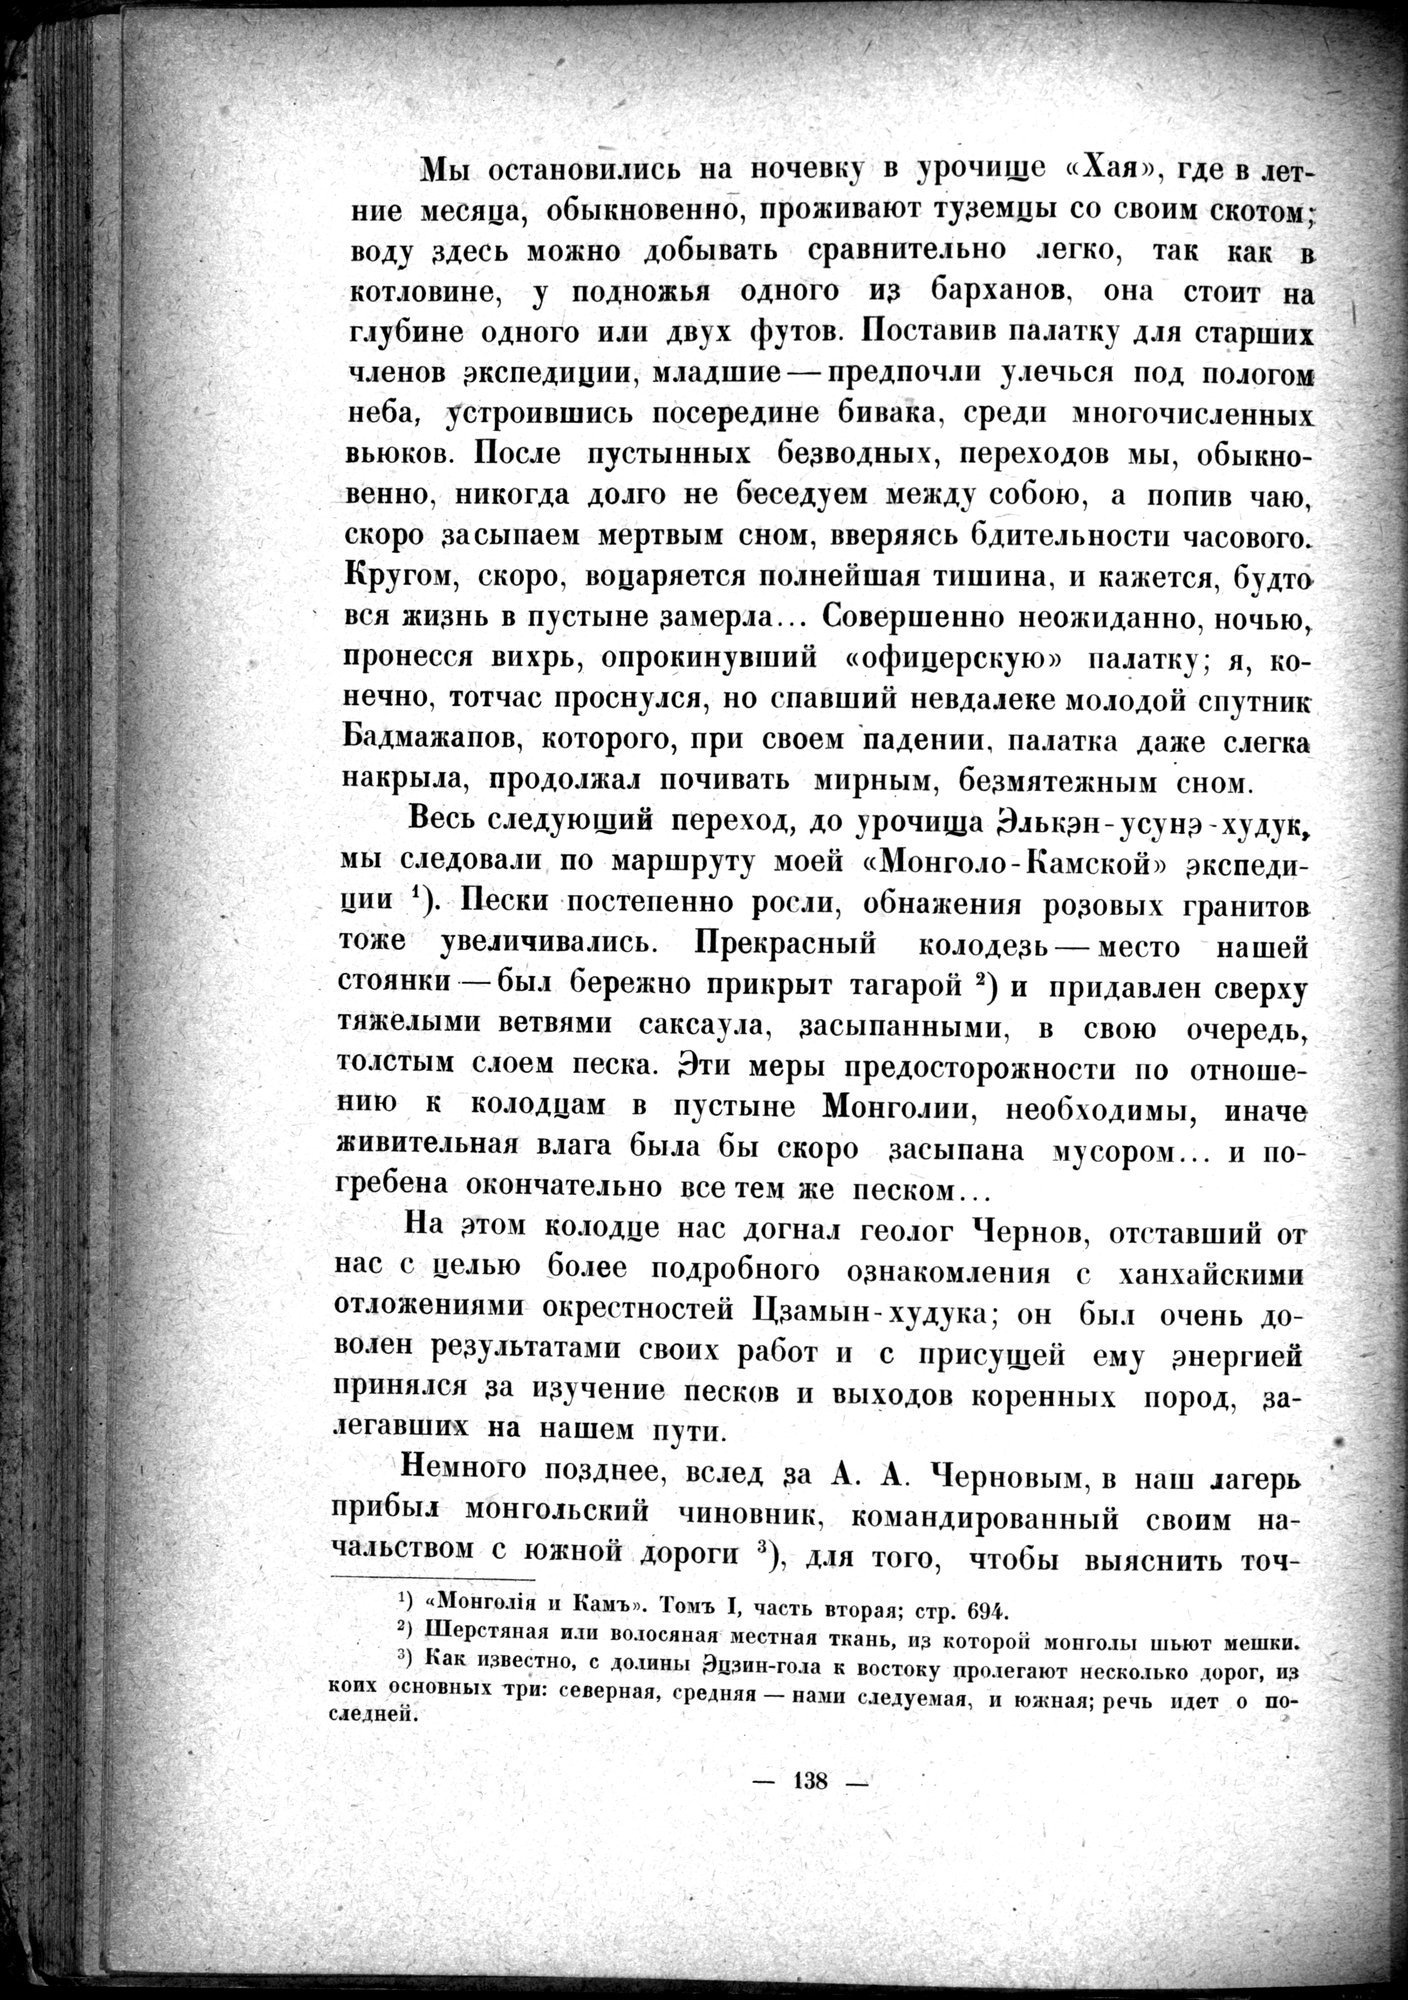 Mongoliya i Amdo i mertby gorod Khara-Khoto : vol.1 / Page 166 (Grayscale High Resolution Image)